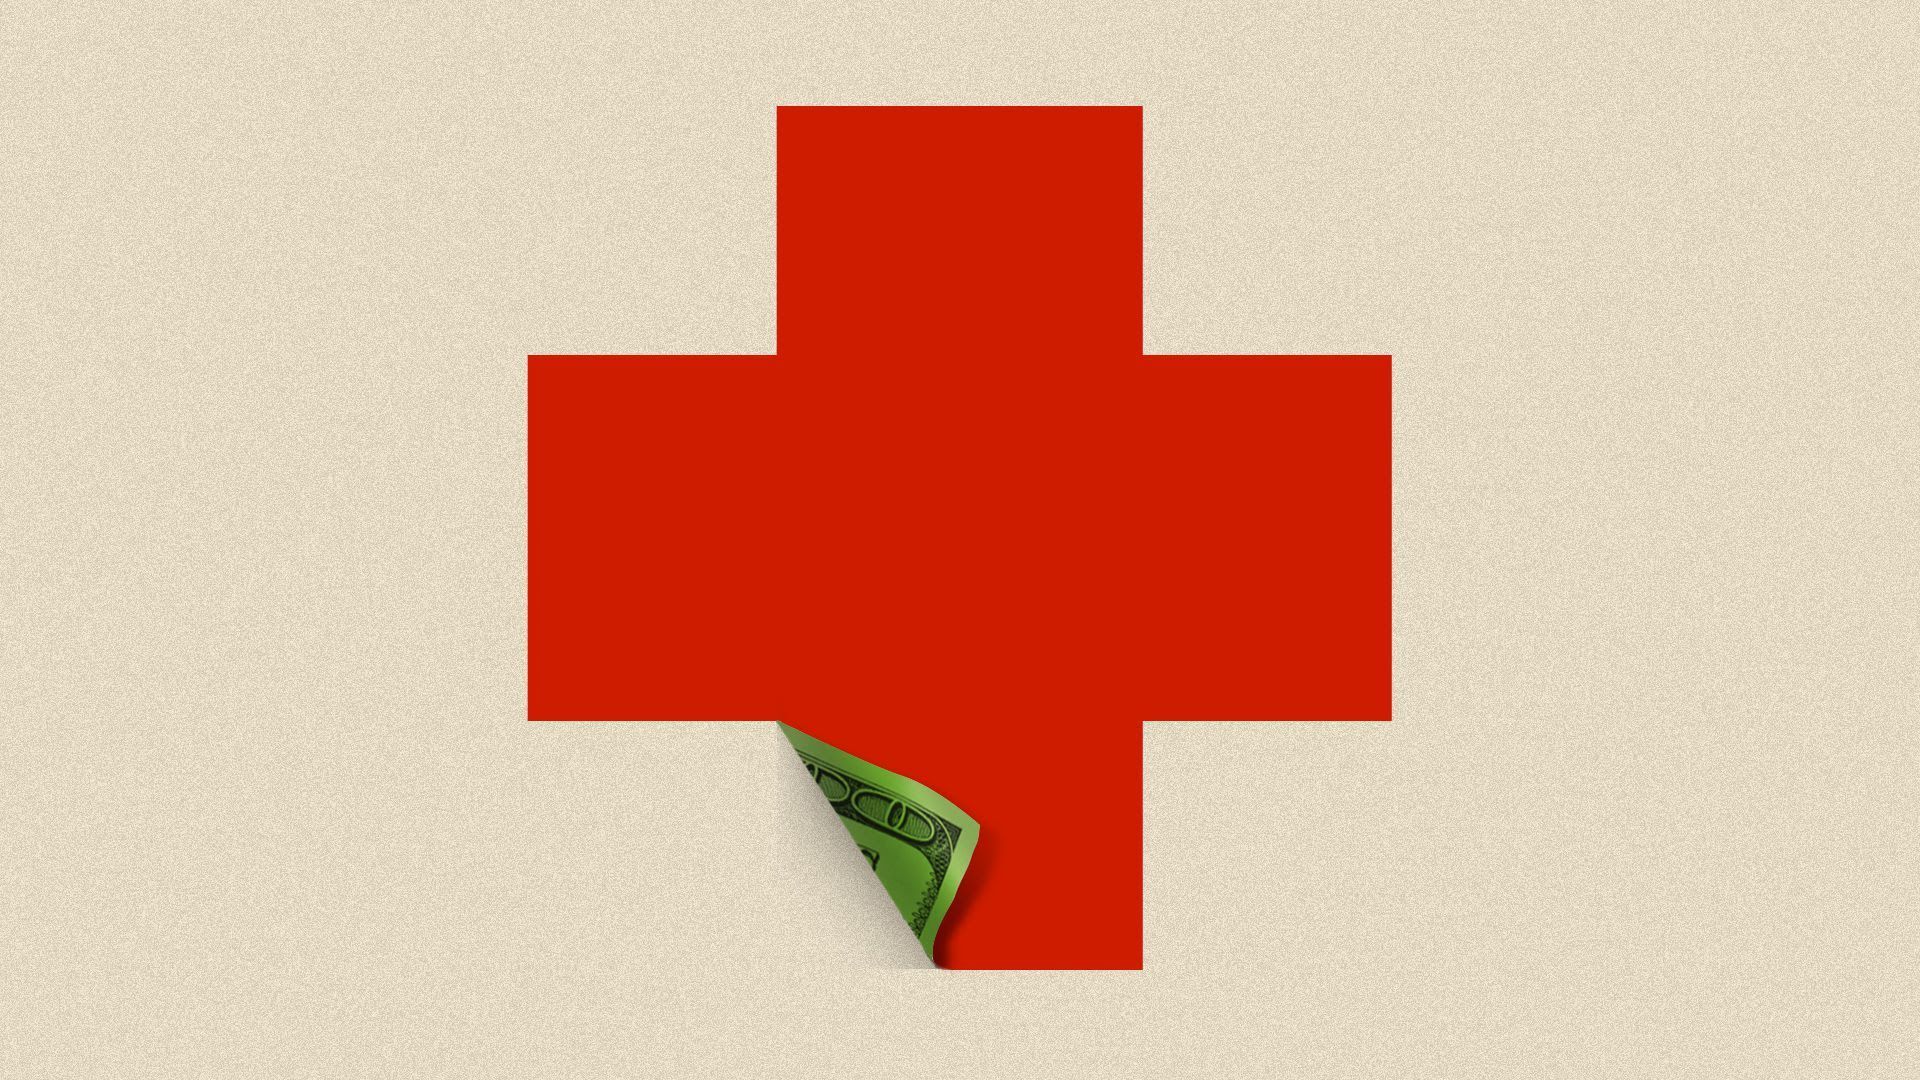 Illustration of a medical symbol peeling to reveal money